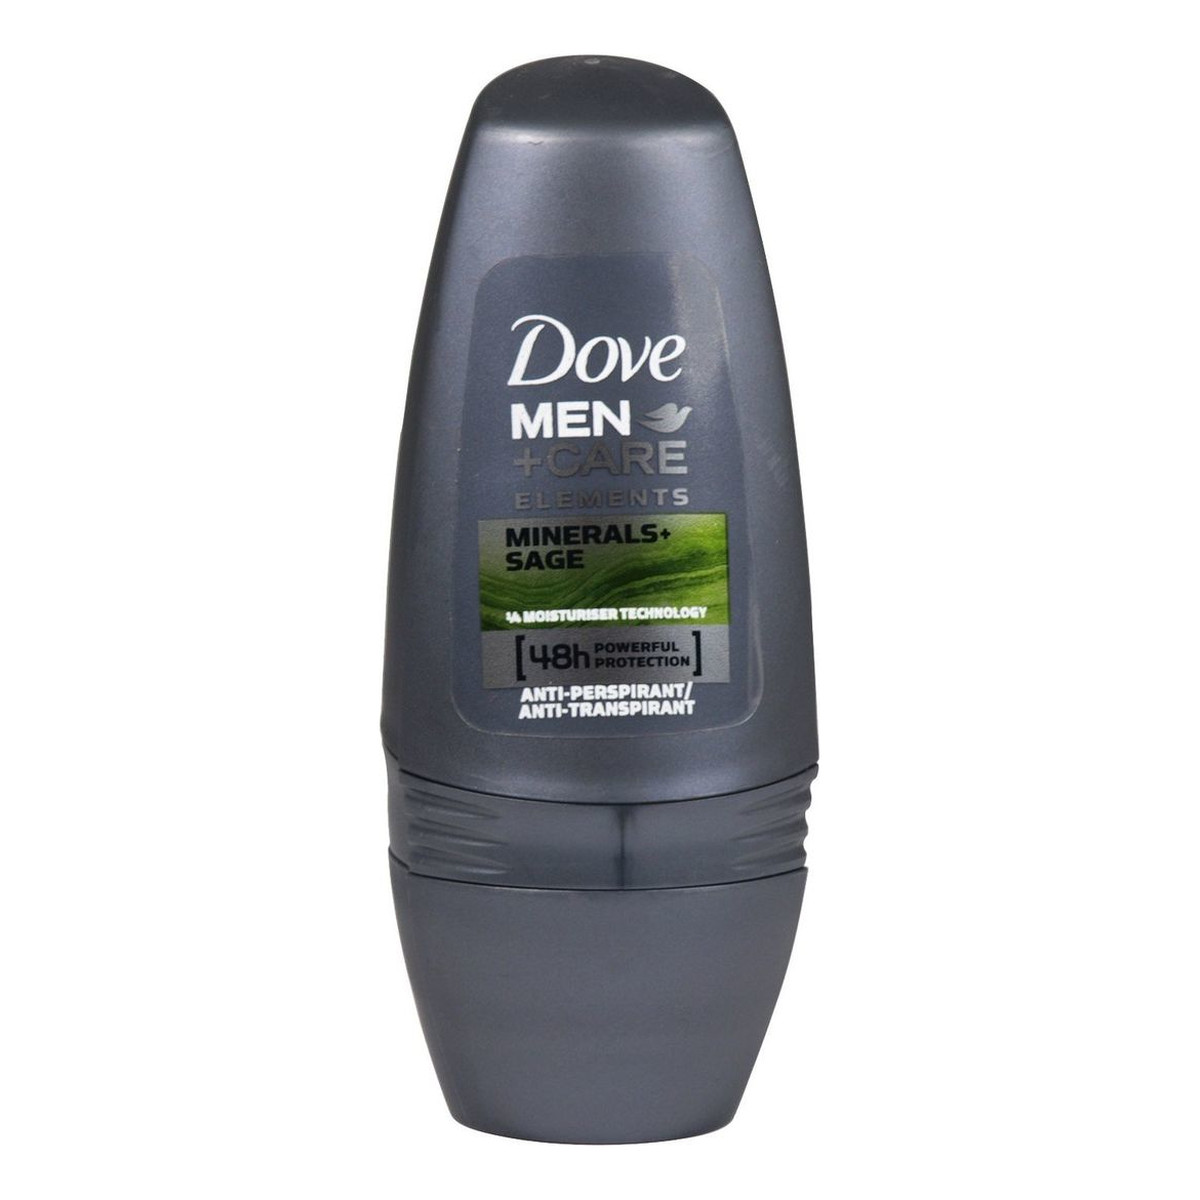 Dove Men+Care Elements Minerals+Sage antyperspirant w kulce 50ml